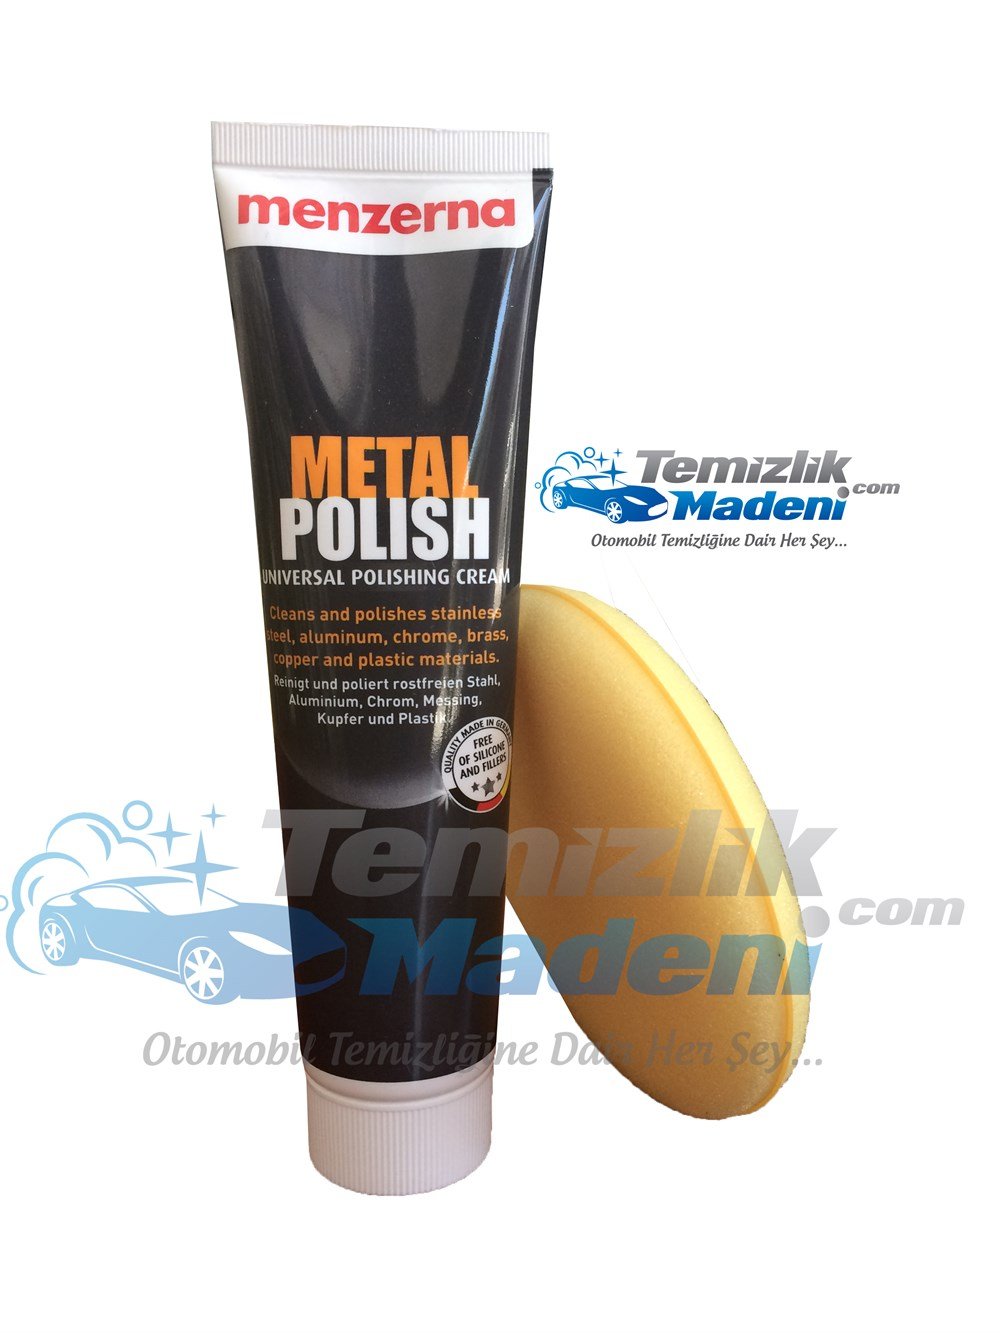 Menzerna Polishing Cream Metal Polish